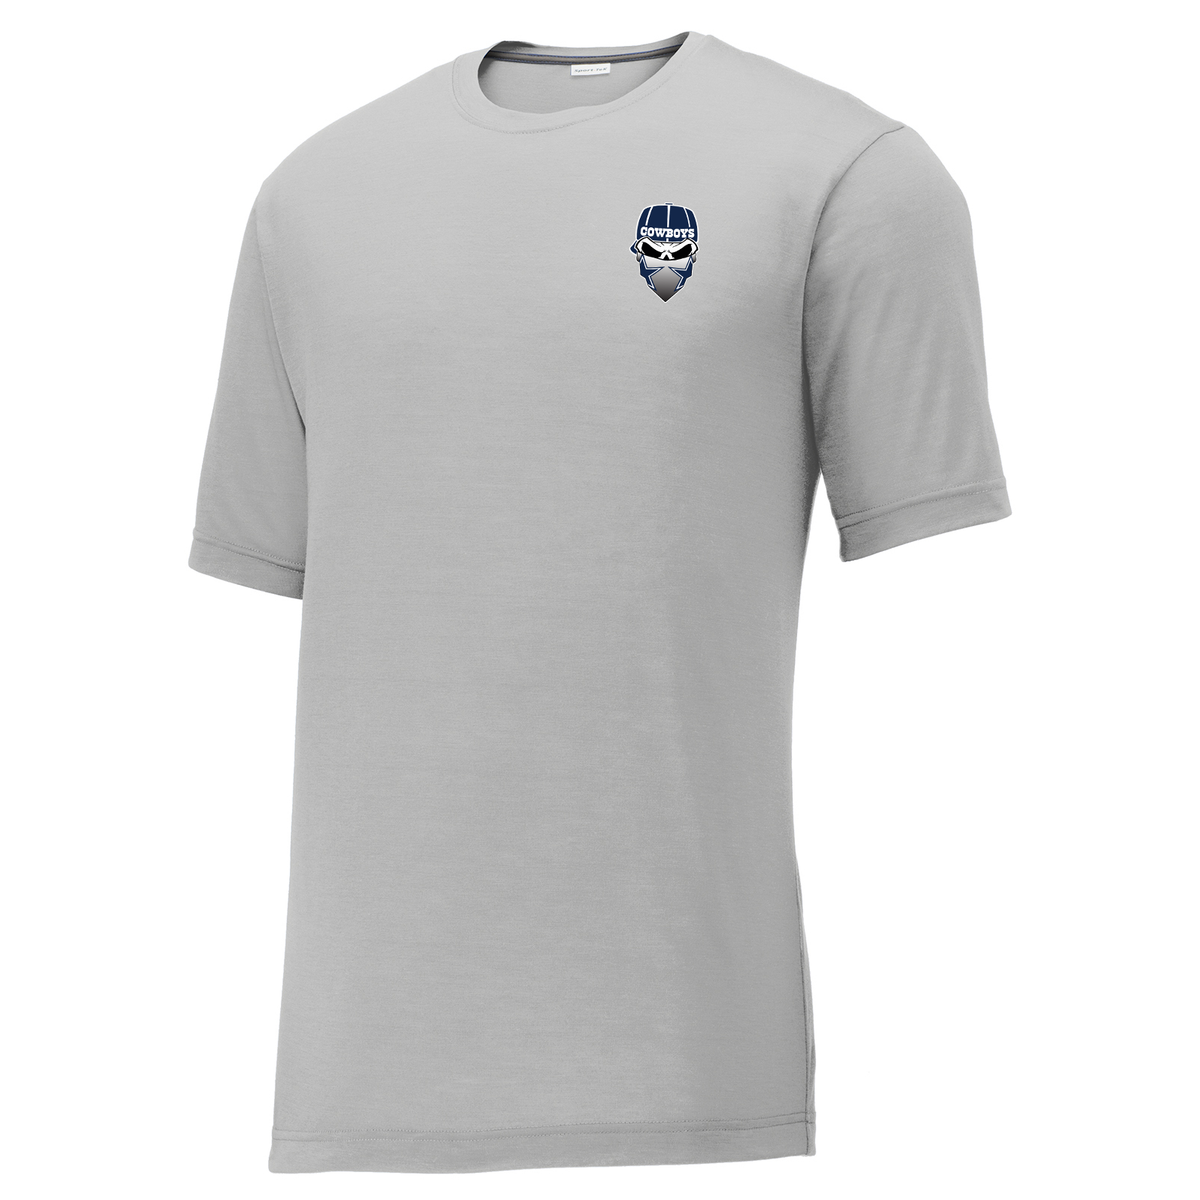 Cowboys Football CottonTouch Performance T-Shirt